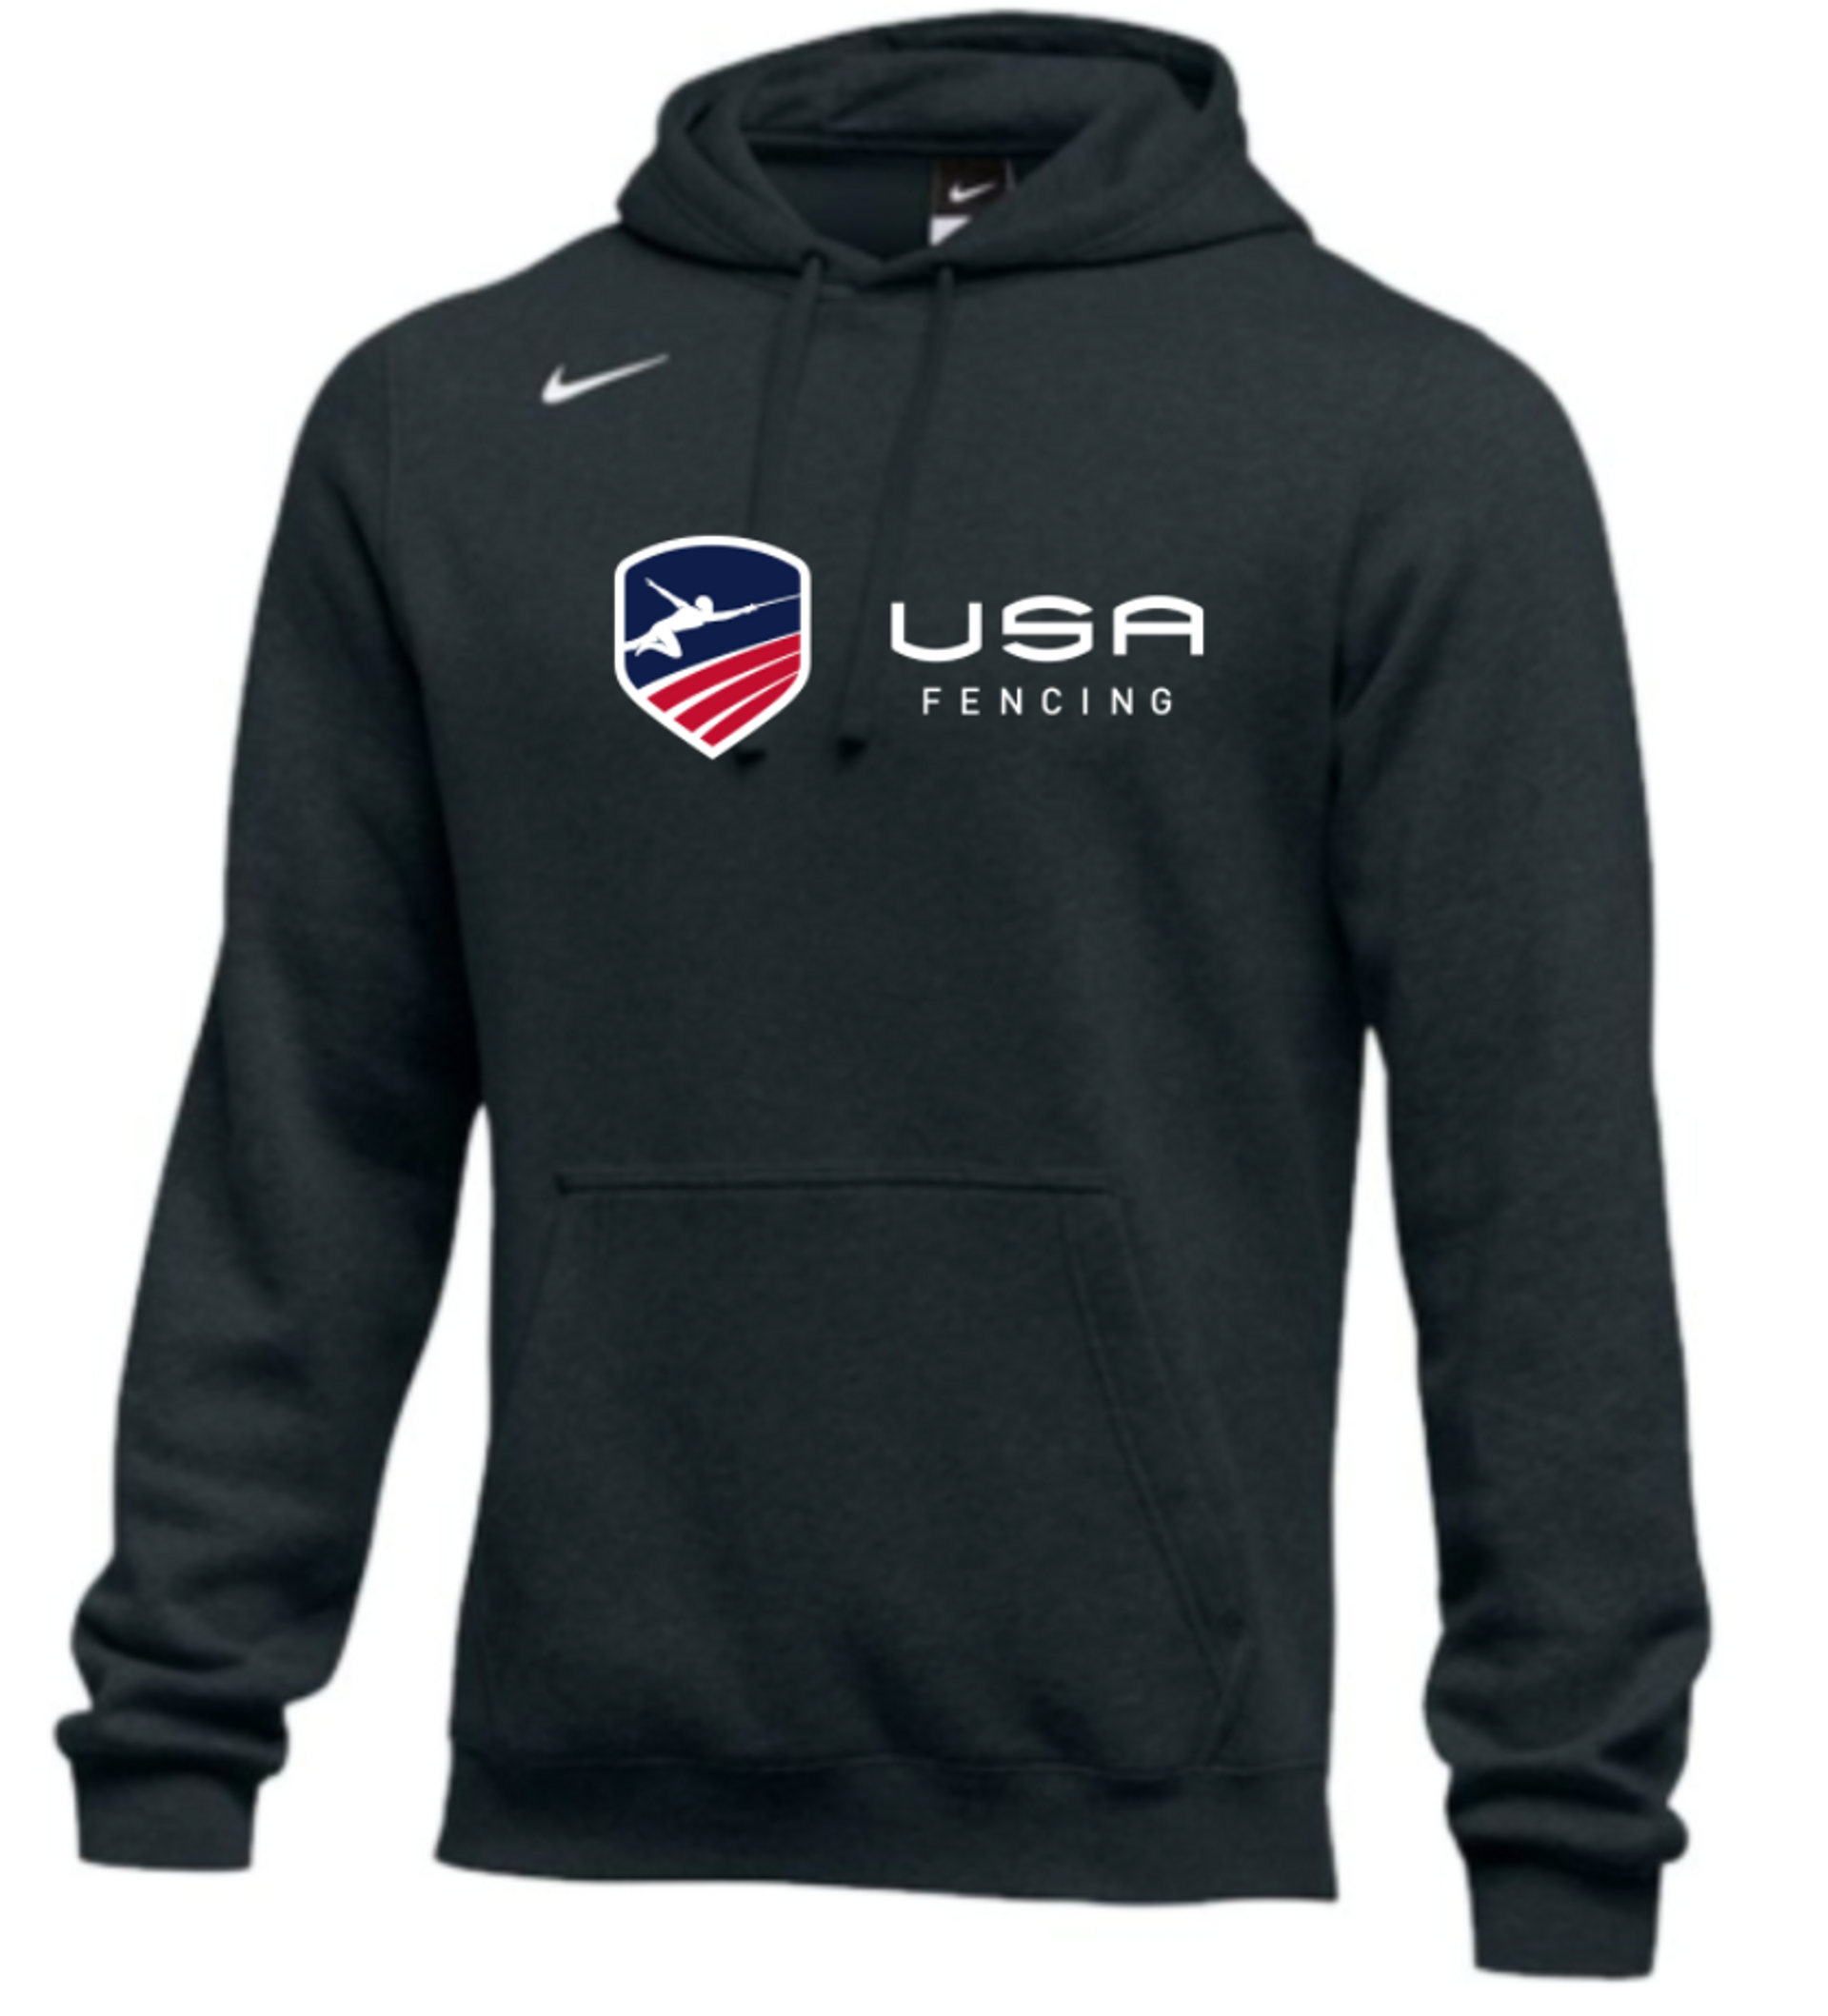 Nike Men's USA Fencing Club Fleece Pullover Hoodie - Black